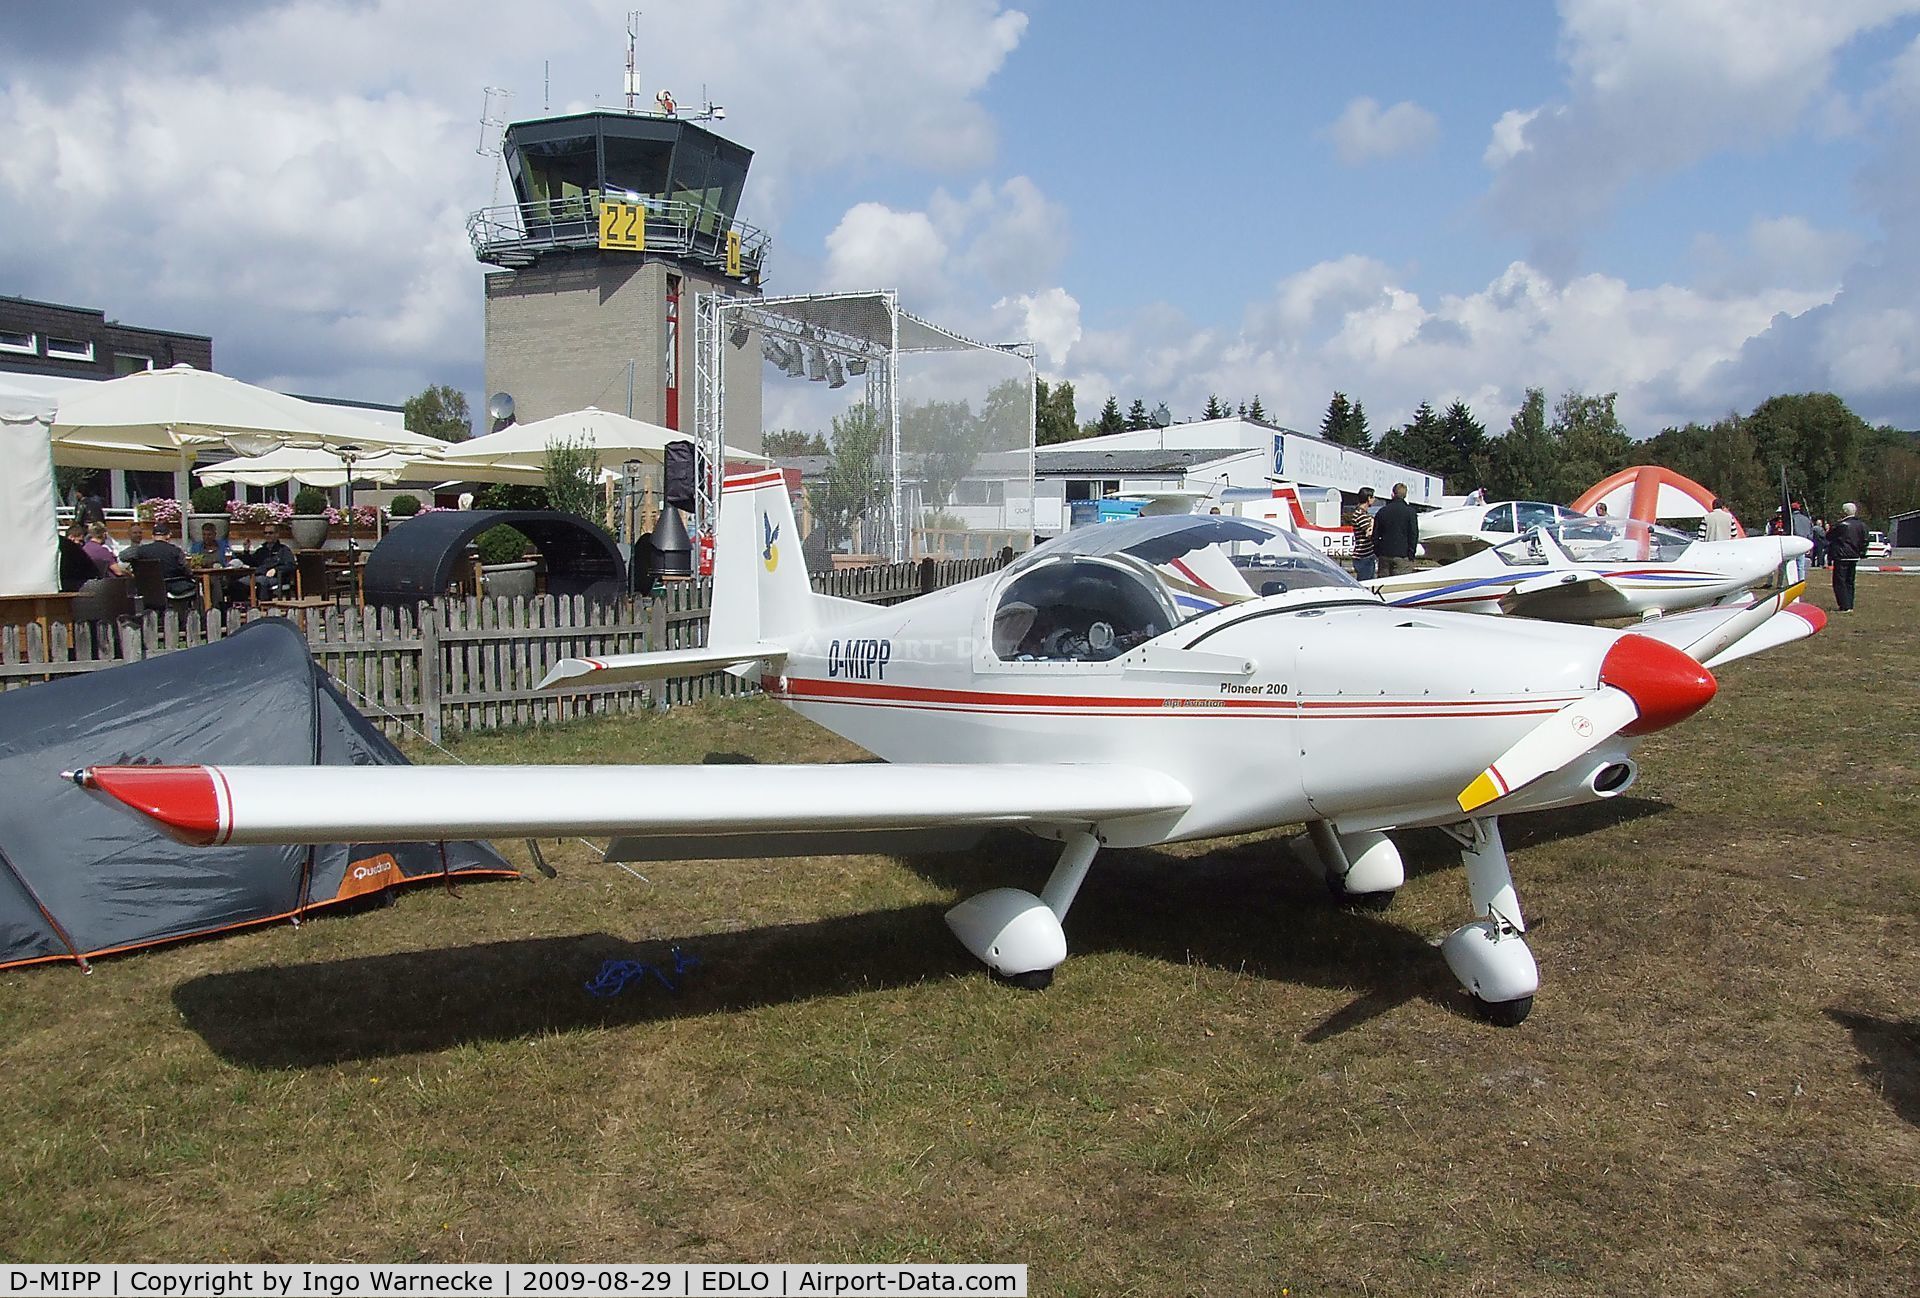 D-MIPP, Alpi Aviation Pioneer 200 C/N Not found D-MIPP, Alpi Aviation Pioneer 200 at the 2009 OUV-Meeting at Oerlinghausen airfield